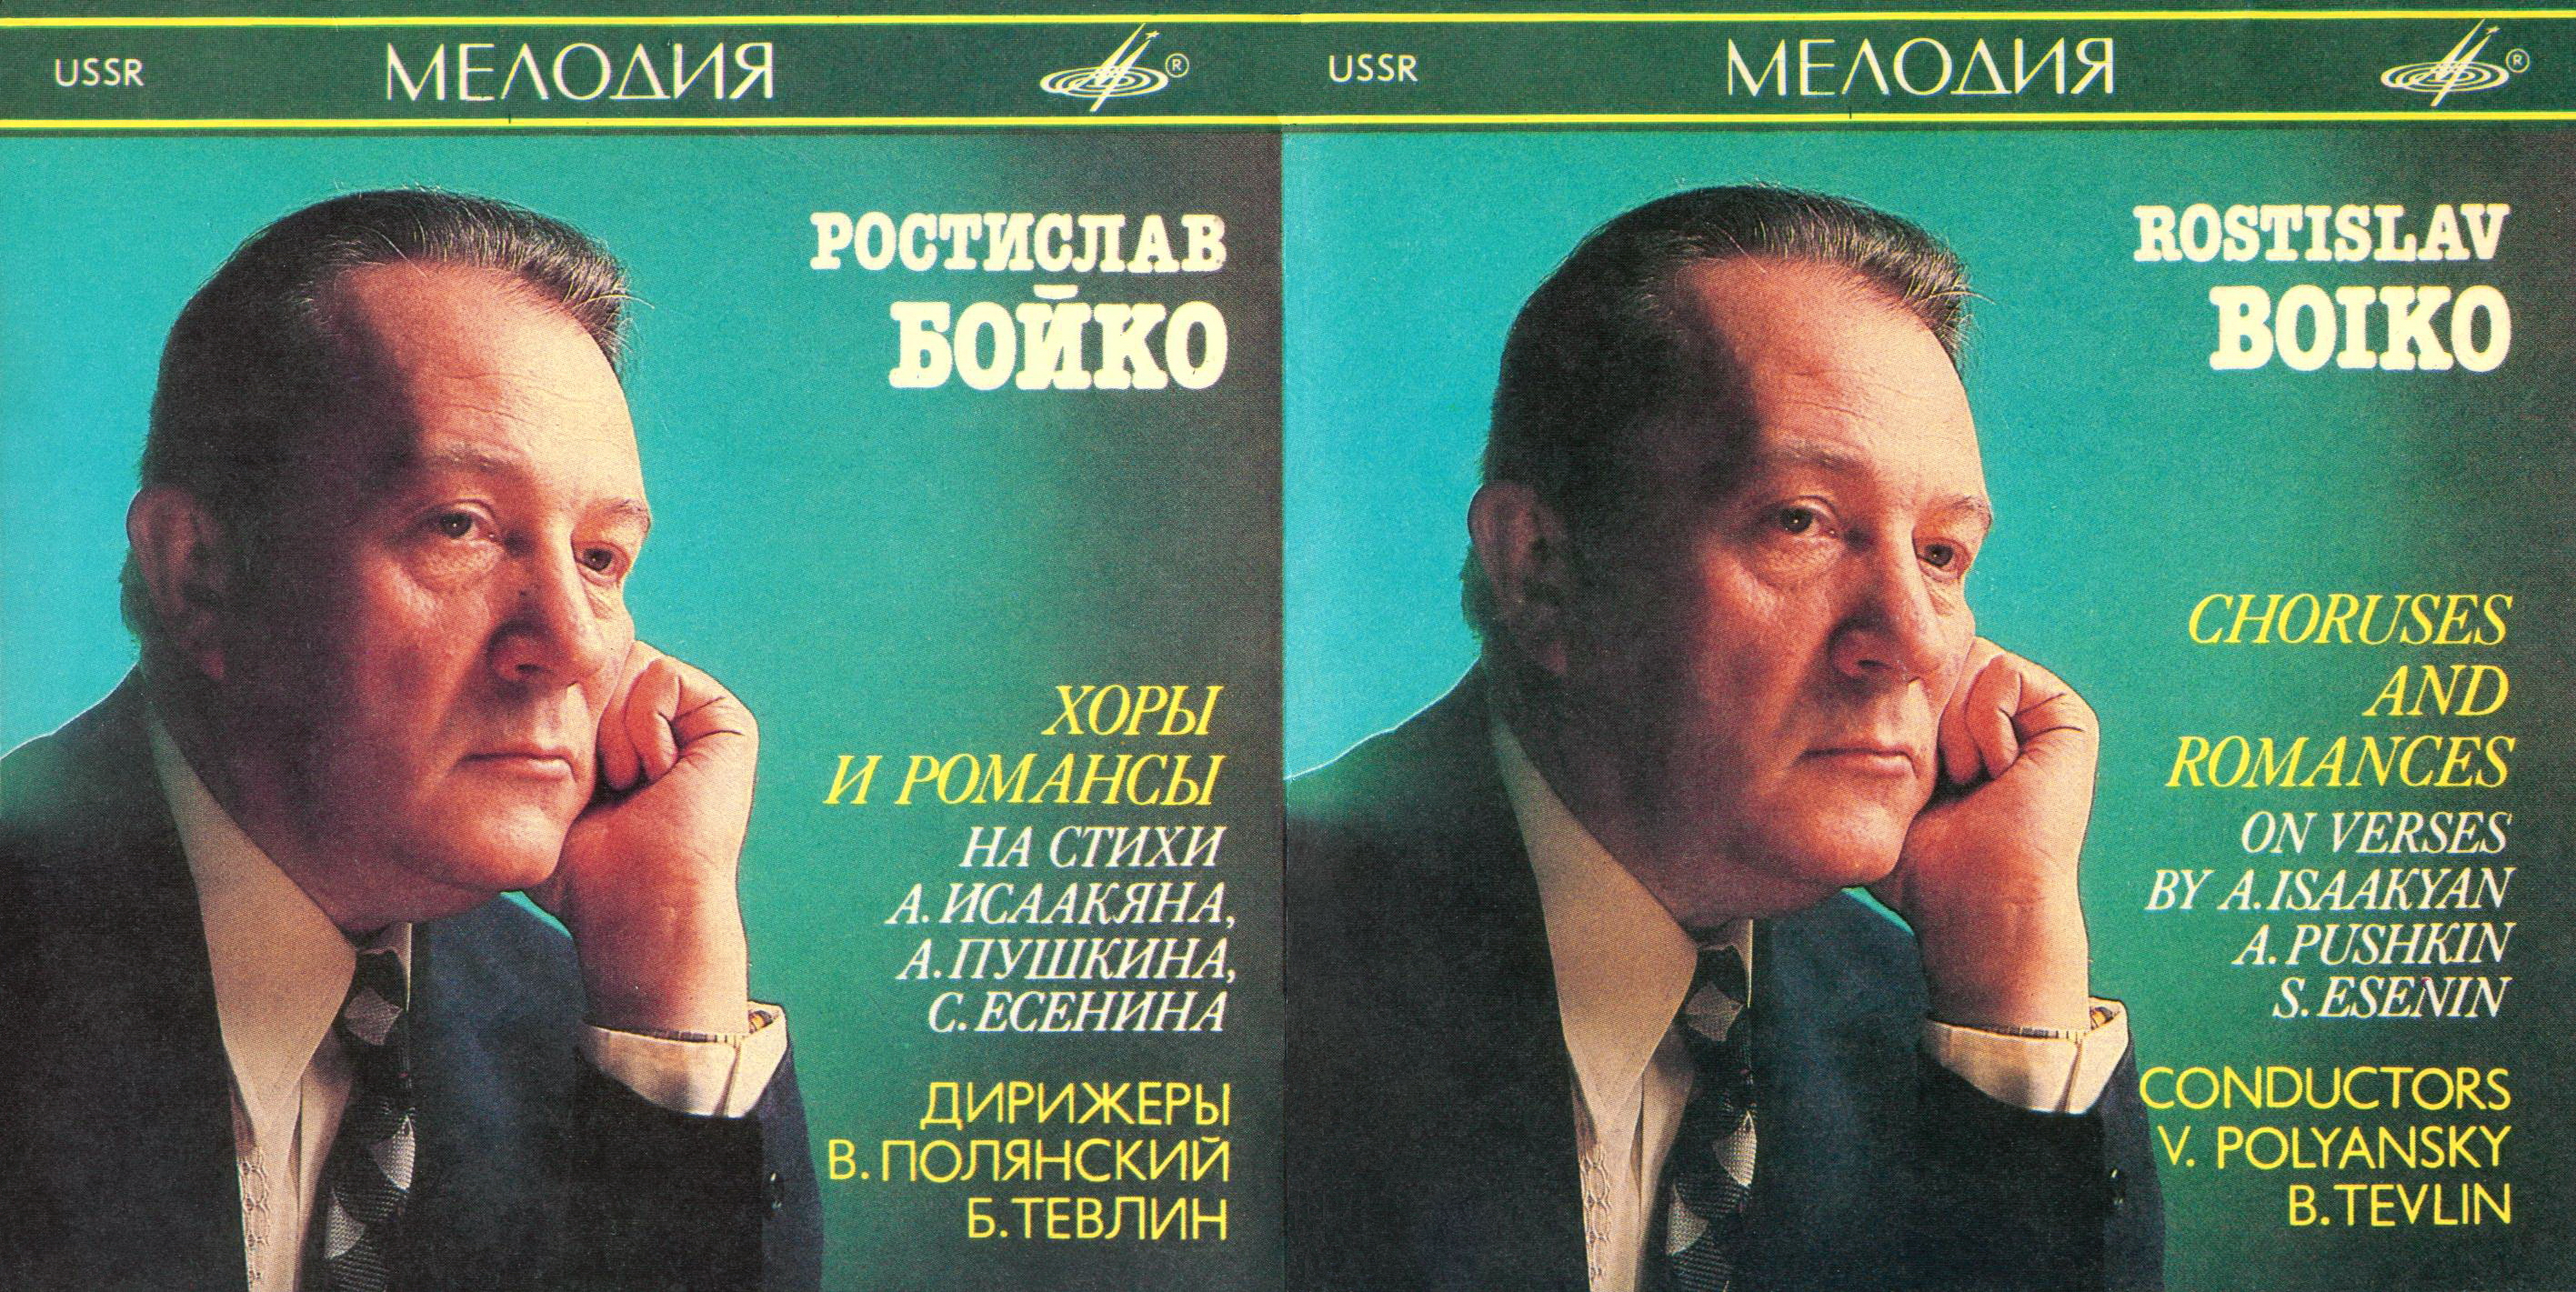 Rostislav Boiko - Choruses & Romances on verses by Isaakyan, Pushkin, Esenin - Polynsky, Tevlin